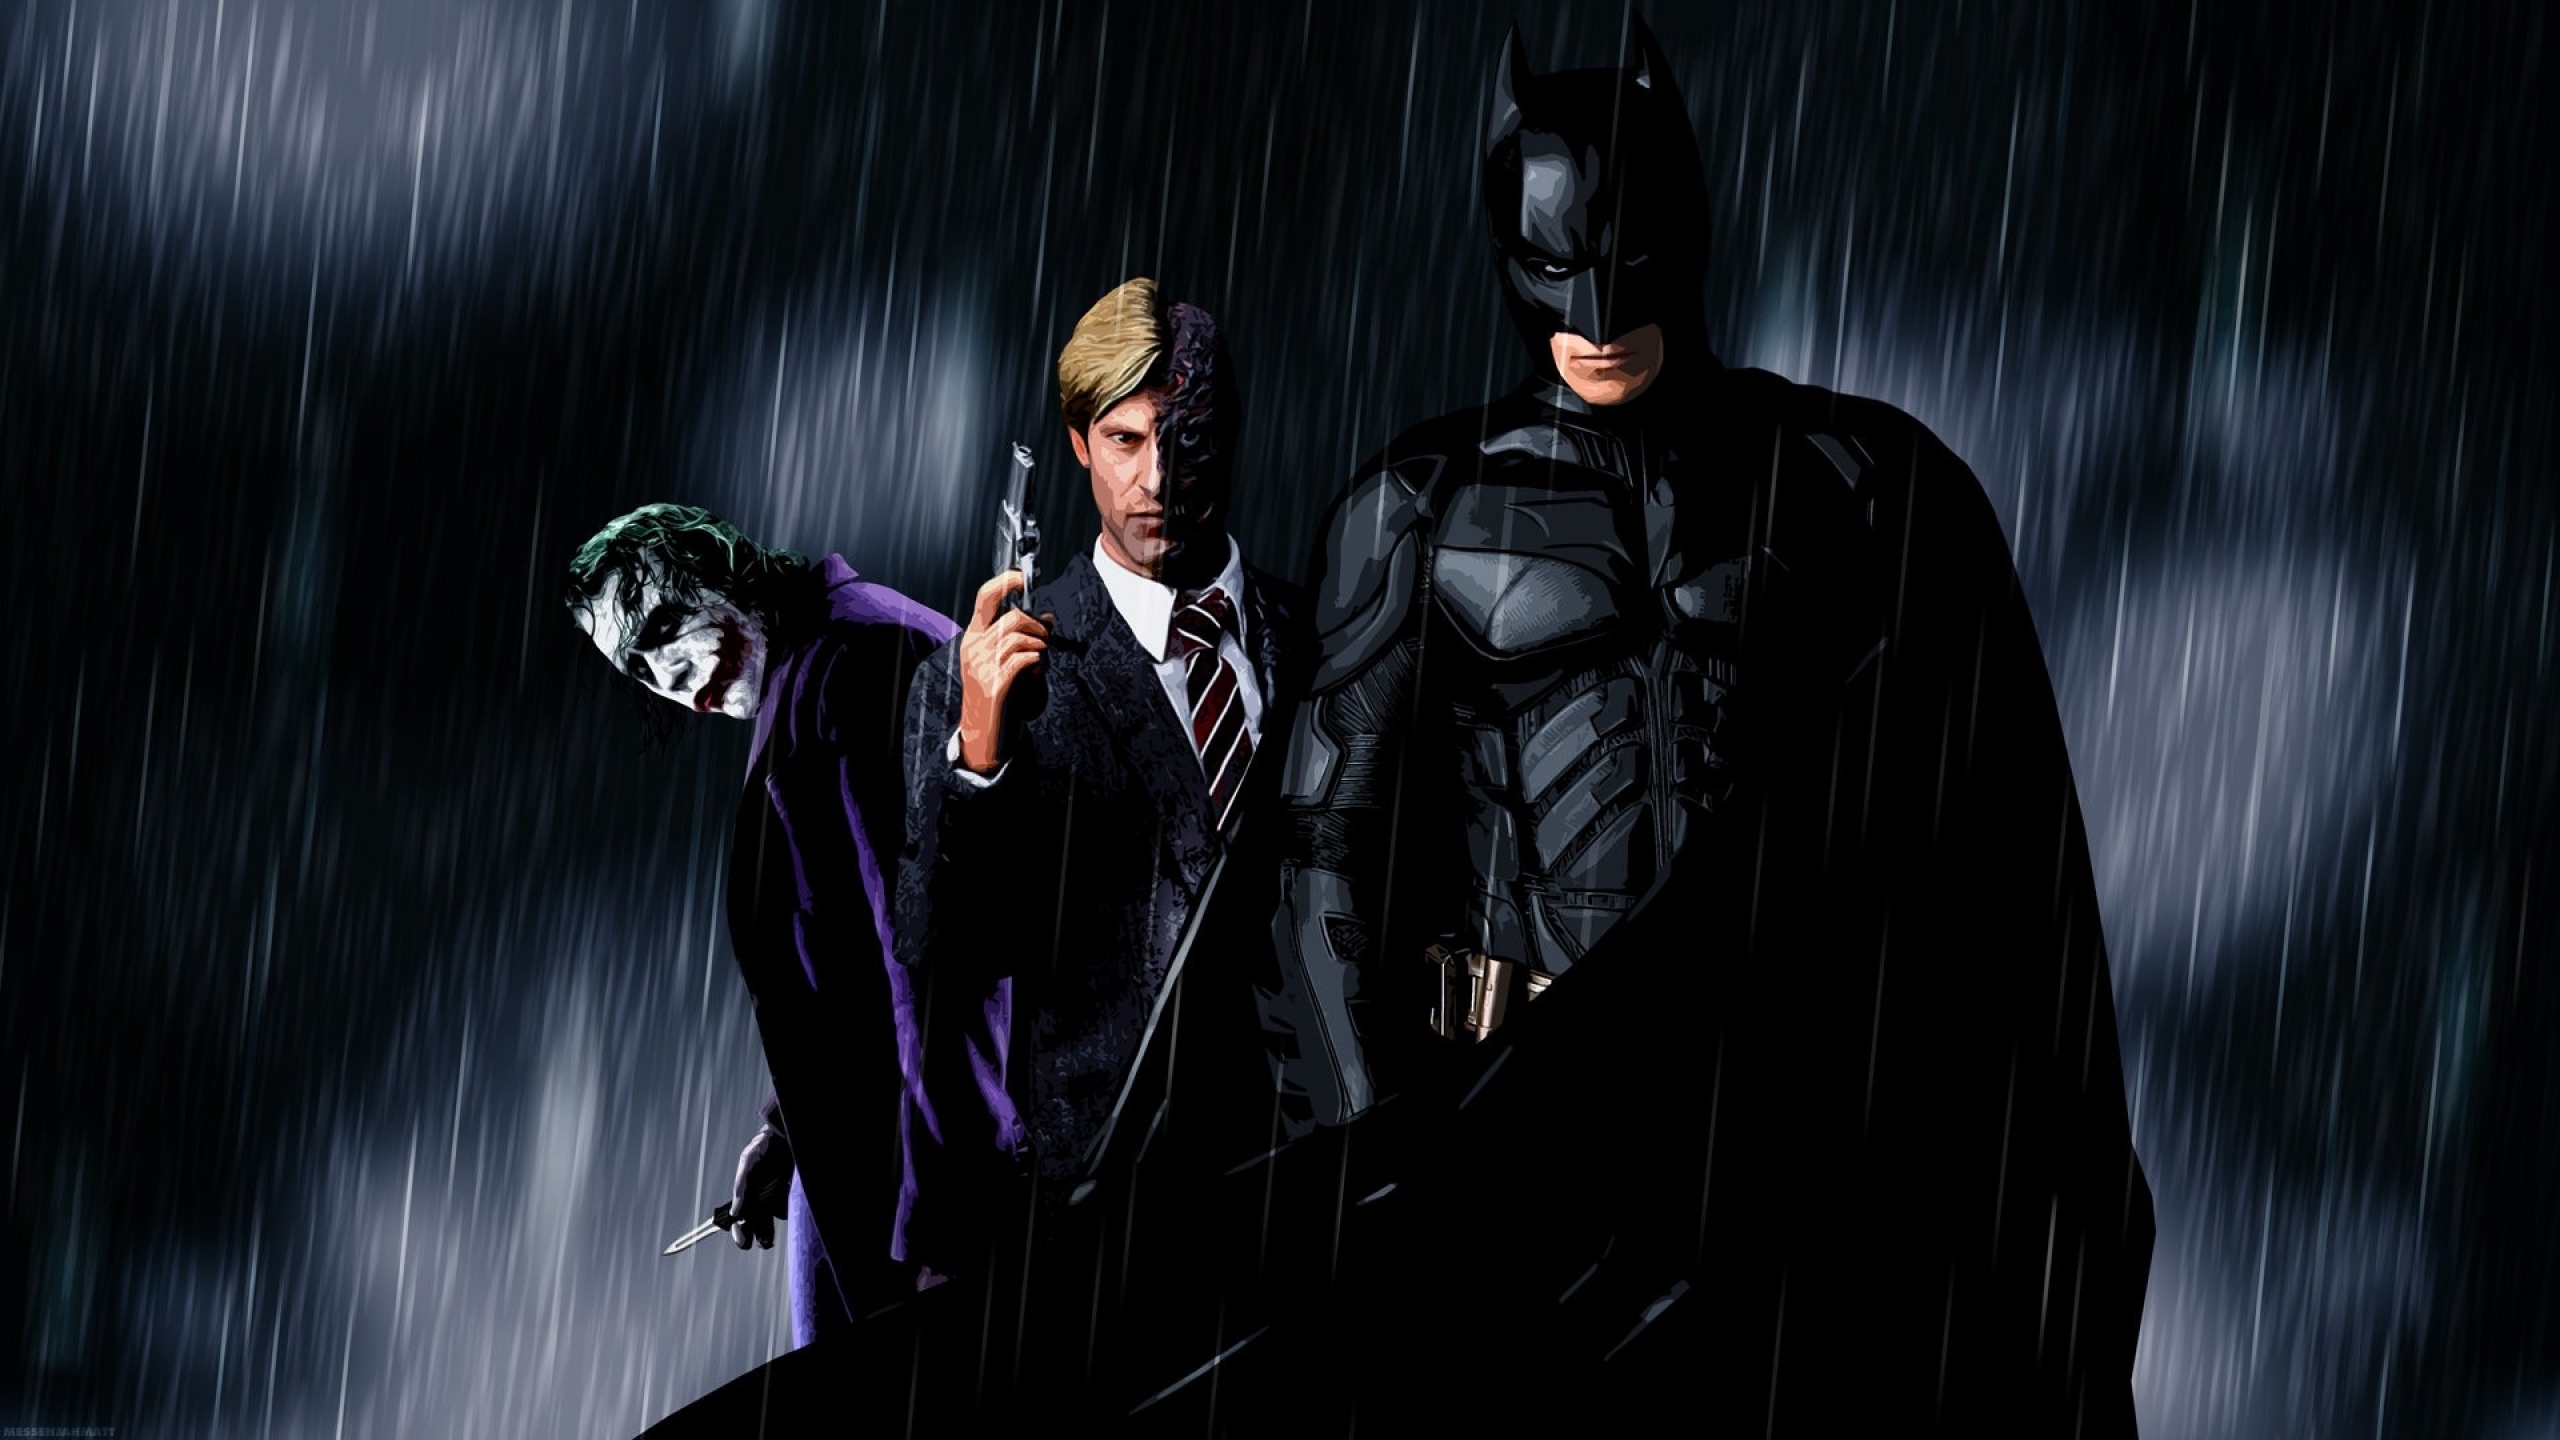 Batman Aaron Eckhart Two Face The Joker Hd Wallpapers For Laptop Widescreen  Free Download  Wallpapers13com